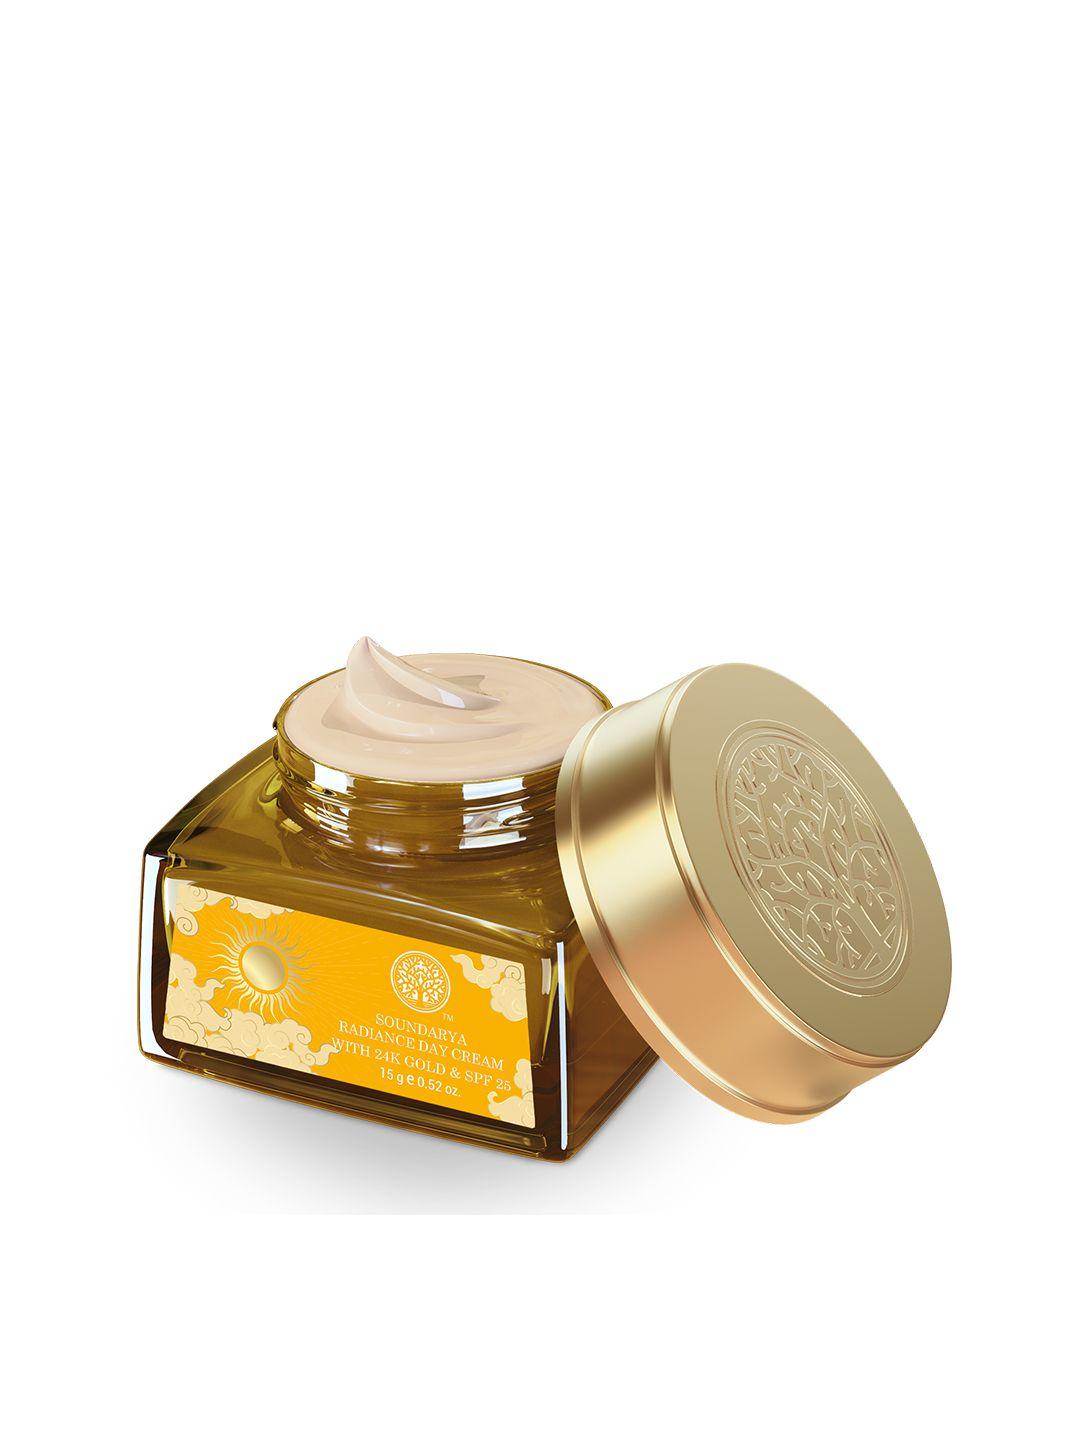 forest essentials travel size soundarya radiance cream with 24k gold & spf 25 - 15g